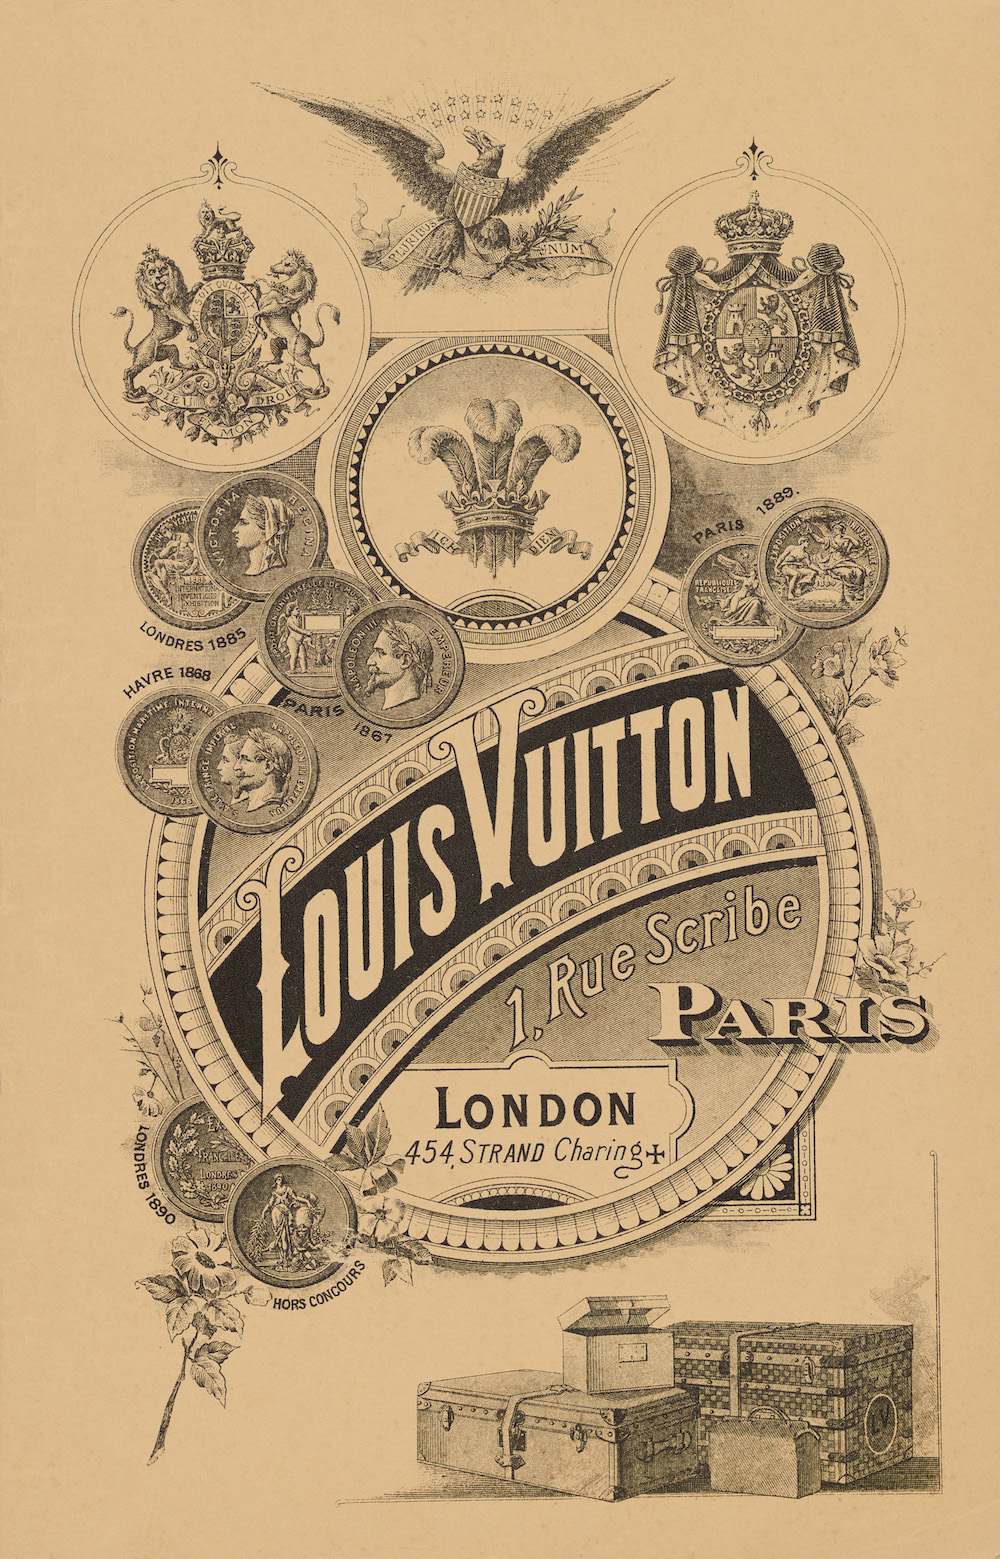 Louis Vuitton Product Catalog, London 1892. Courtesy to Louis Vuitton.